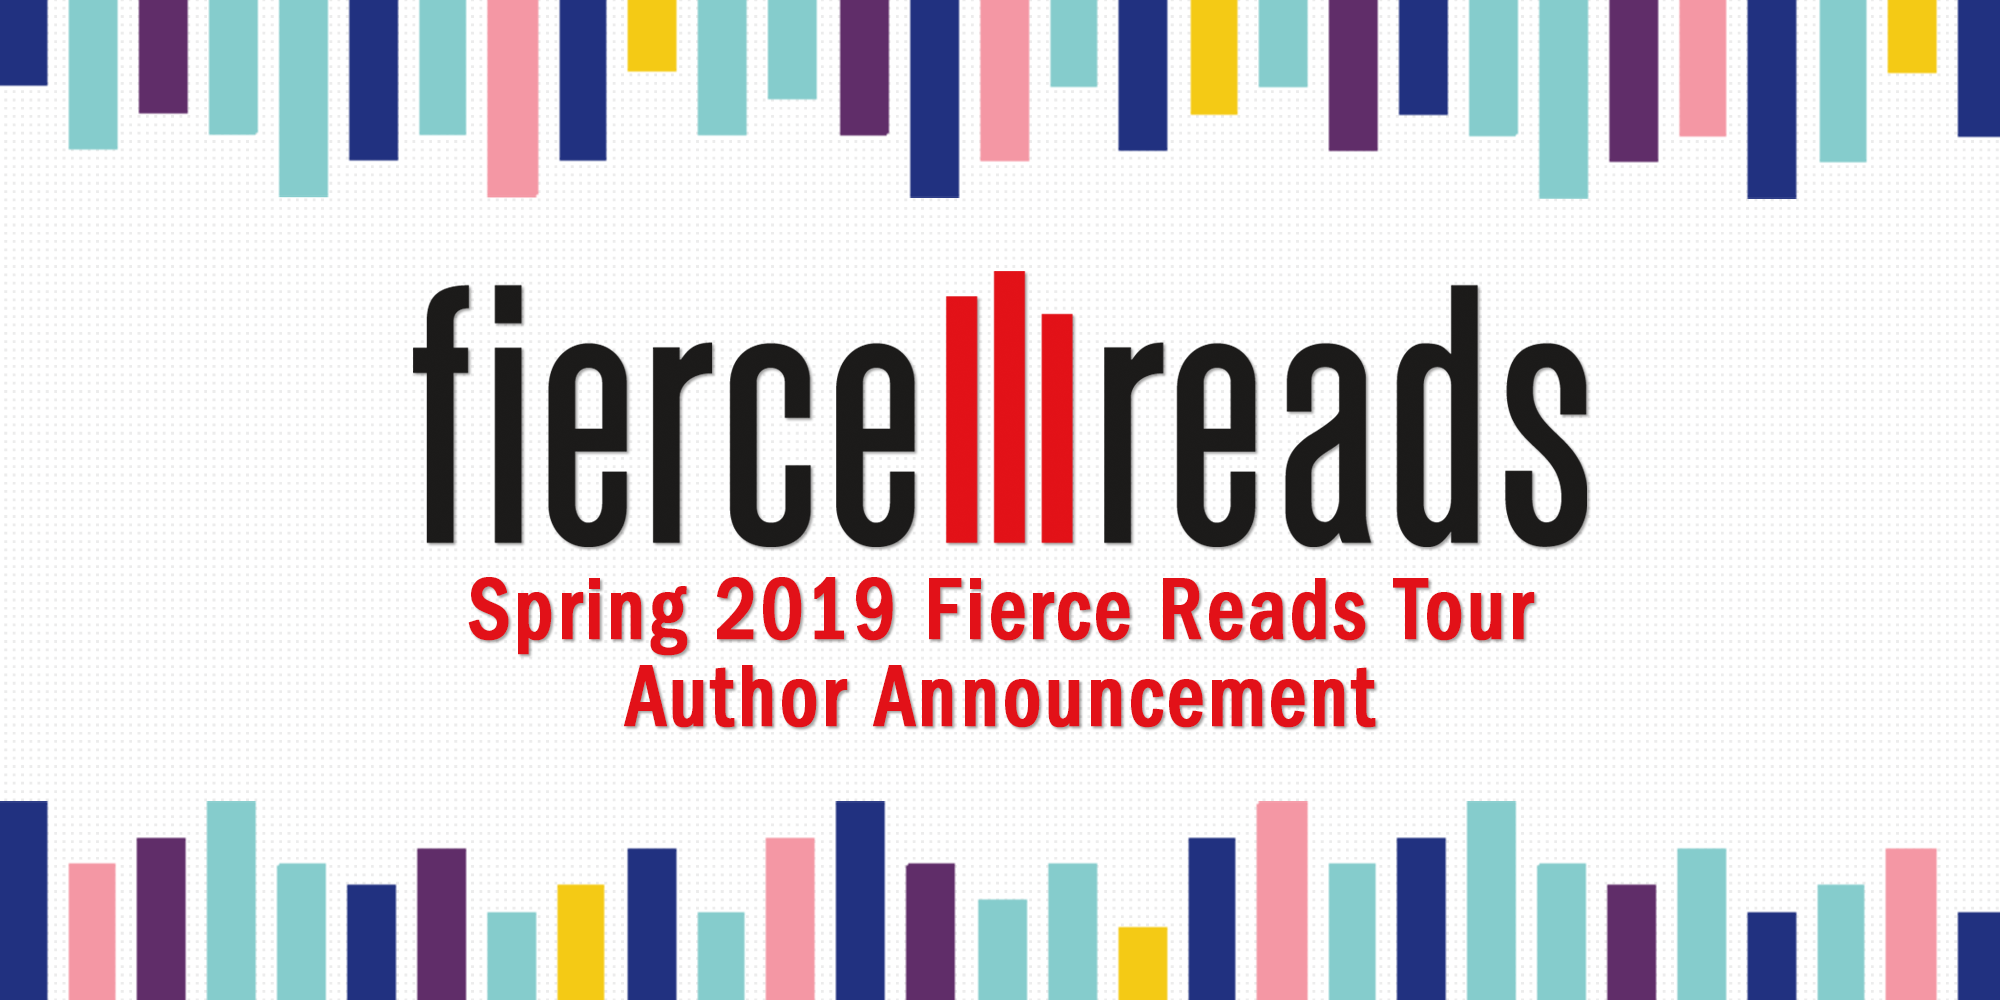 Spring ’19 Fierce Reads Tour Author Announcement